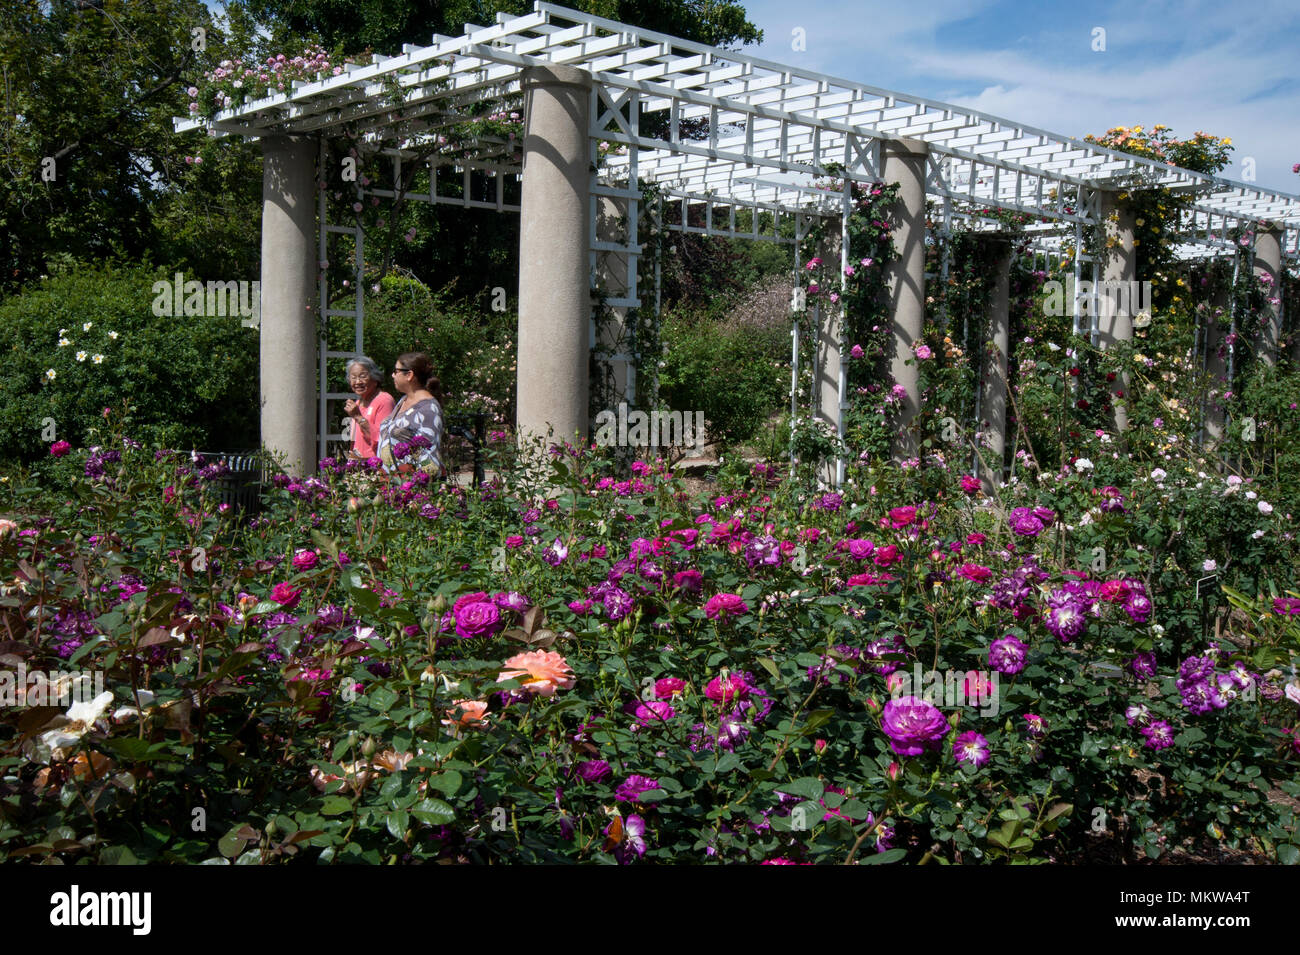 Visitors In Rose Garden At The Huntingtron Gardens In Pasadena Ca